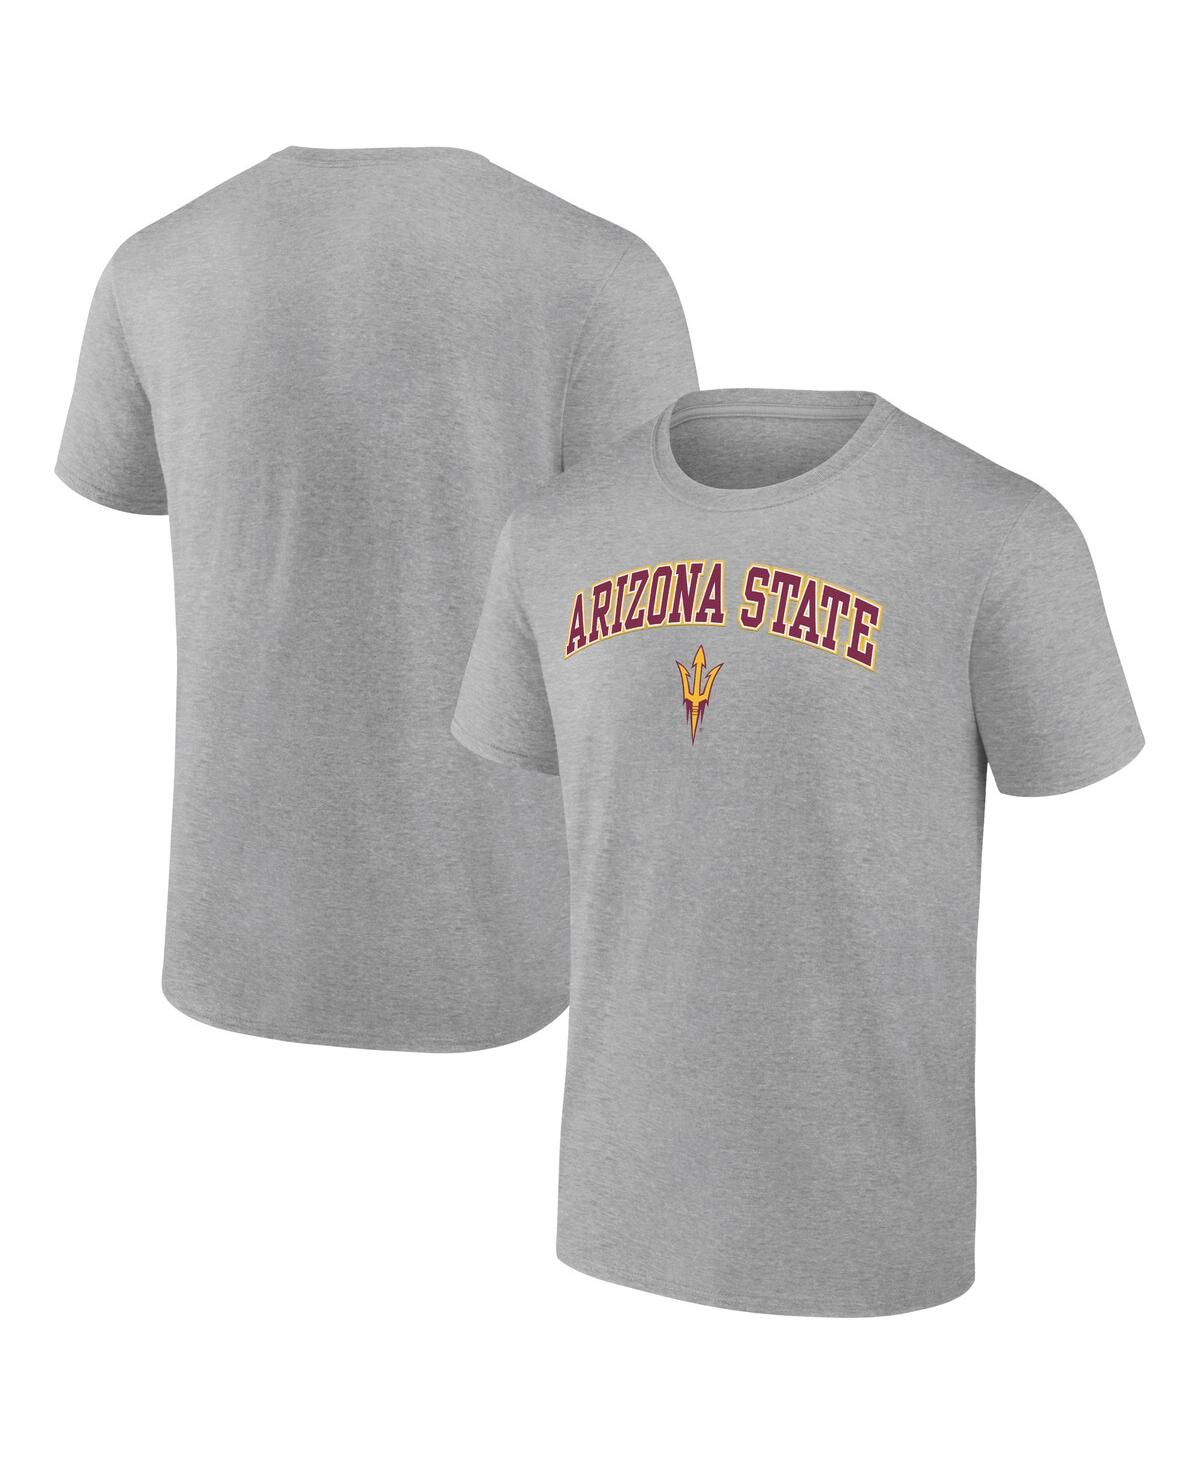 Men's Fanatics Heather Gray Arizona State Sun Devils Campus T-shirt - Heather Gray